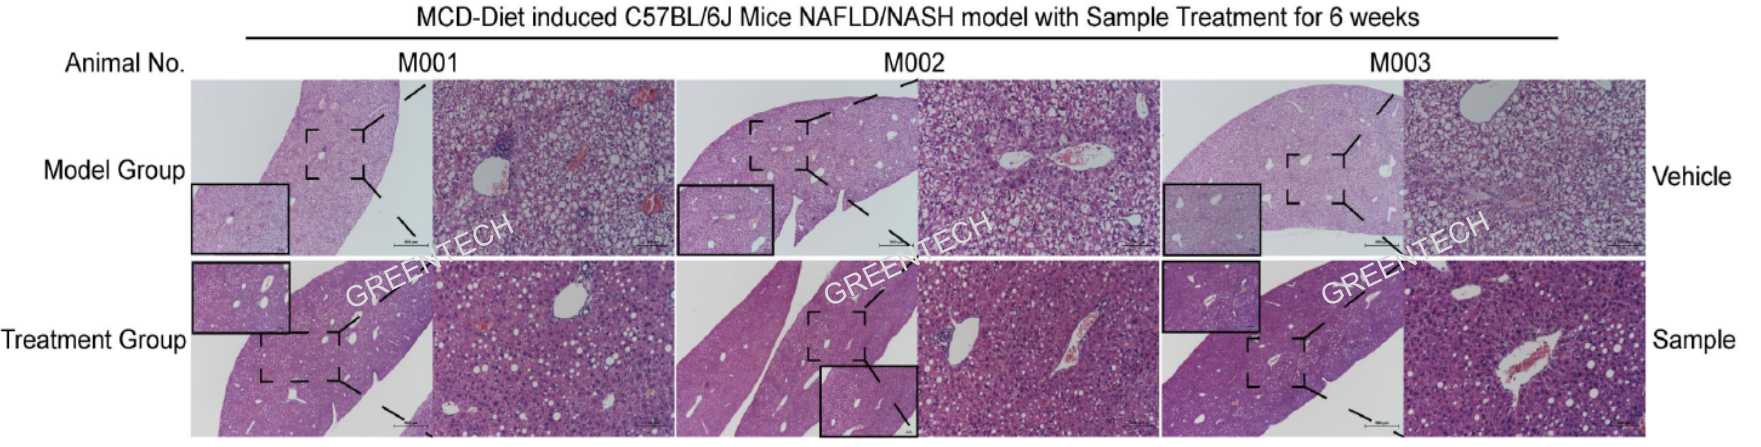 MCD饲料诱导NASH小鼠模型的肝脏组织病理学特征